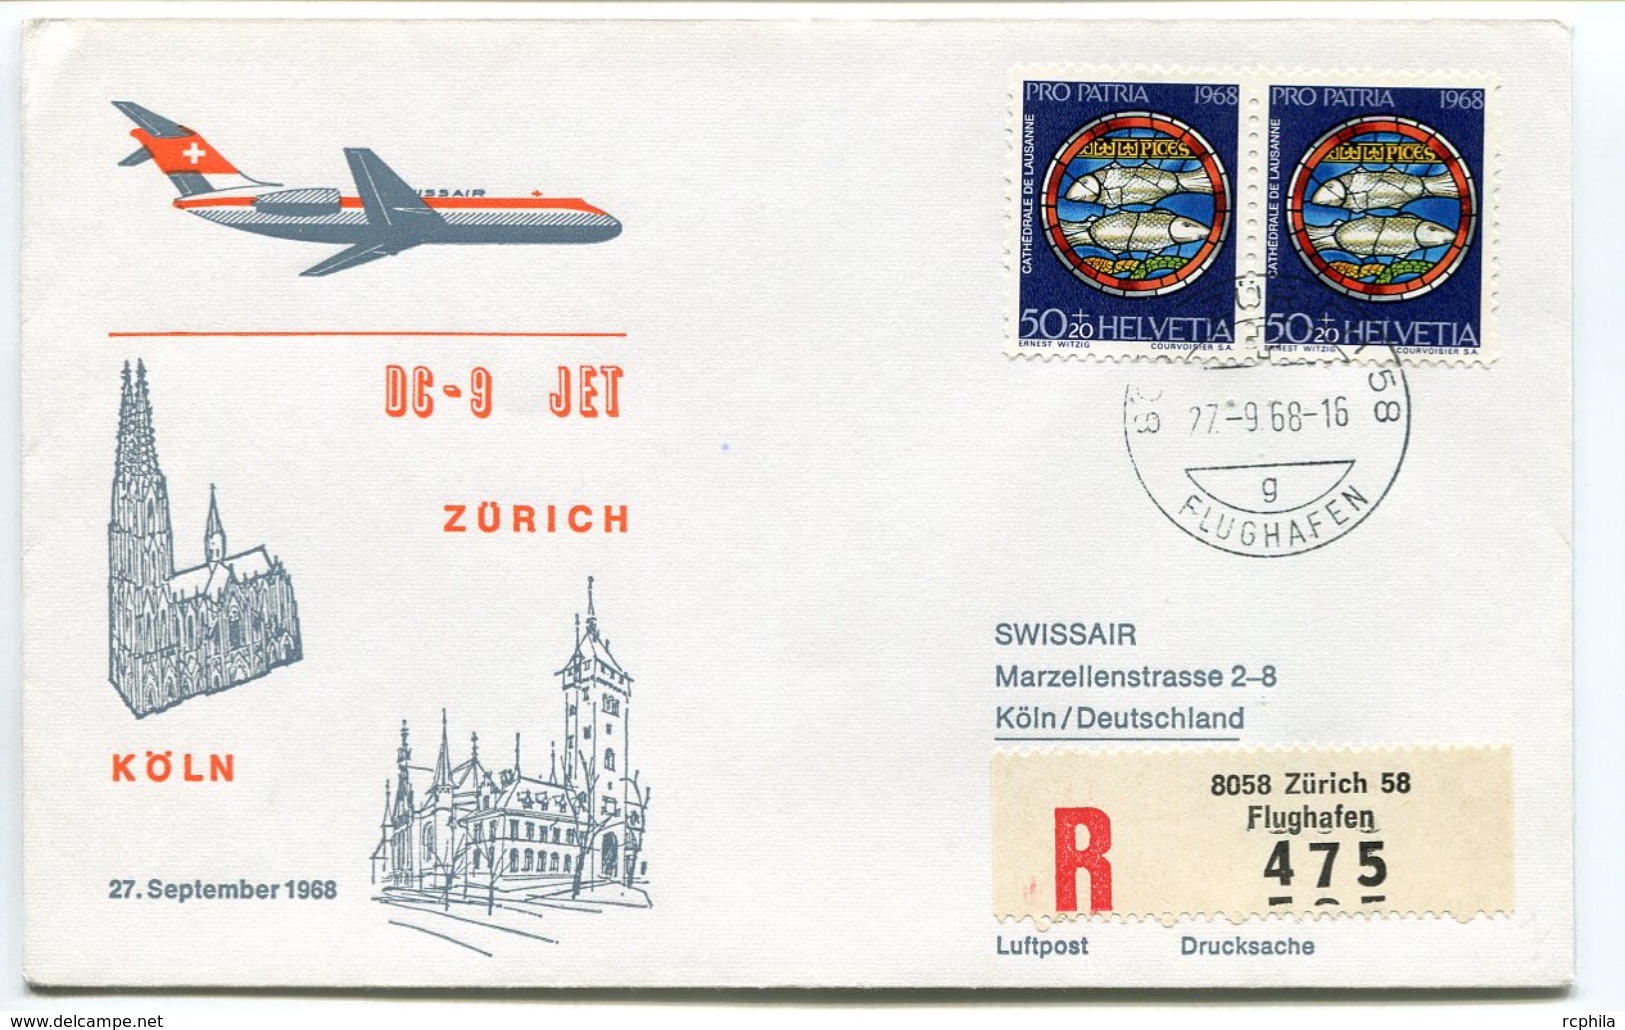 RC 6632 SUISSE 1968 1er VOL SWISSAIR ZURICH - KOLN ALLEMAGNE DC-9 FFC LETTRE COVER - Premiers Vols